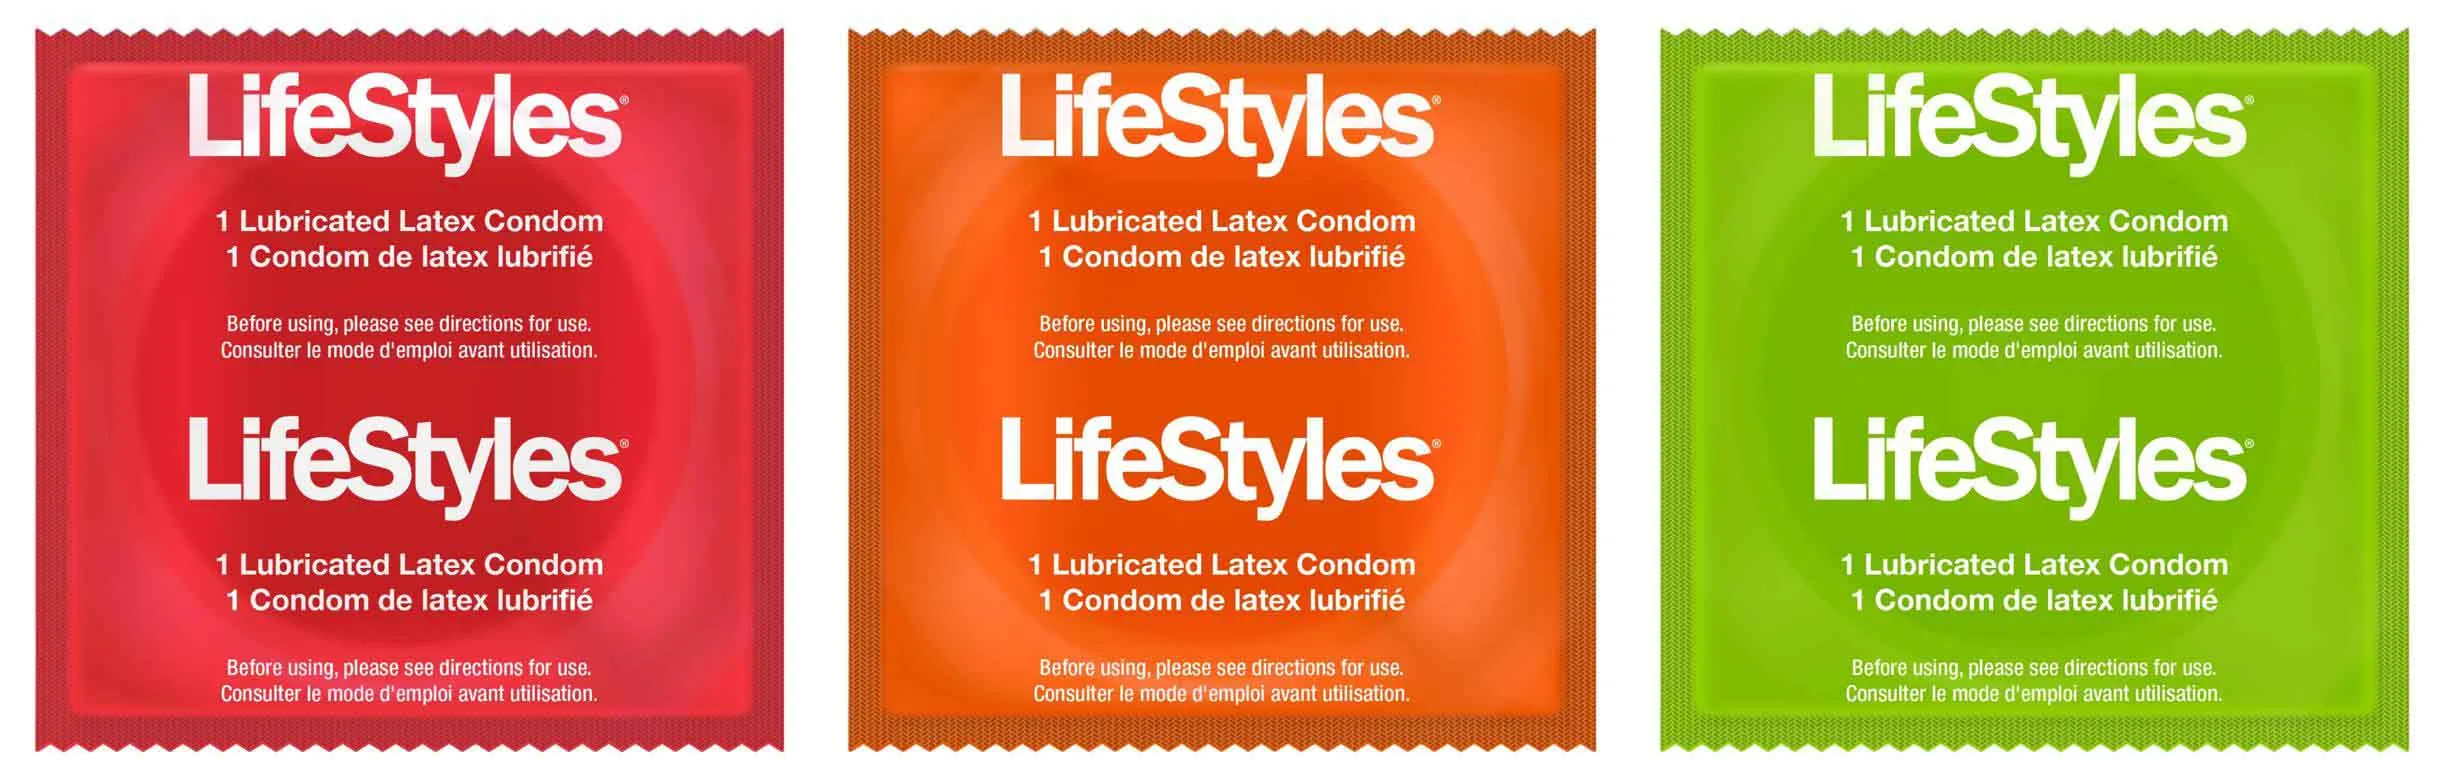 Lifestyles Condoms